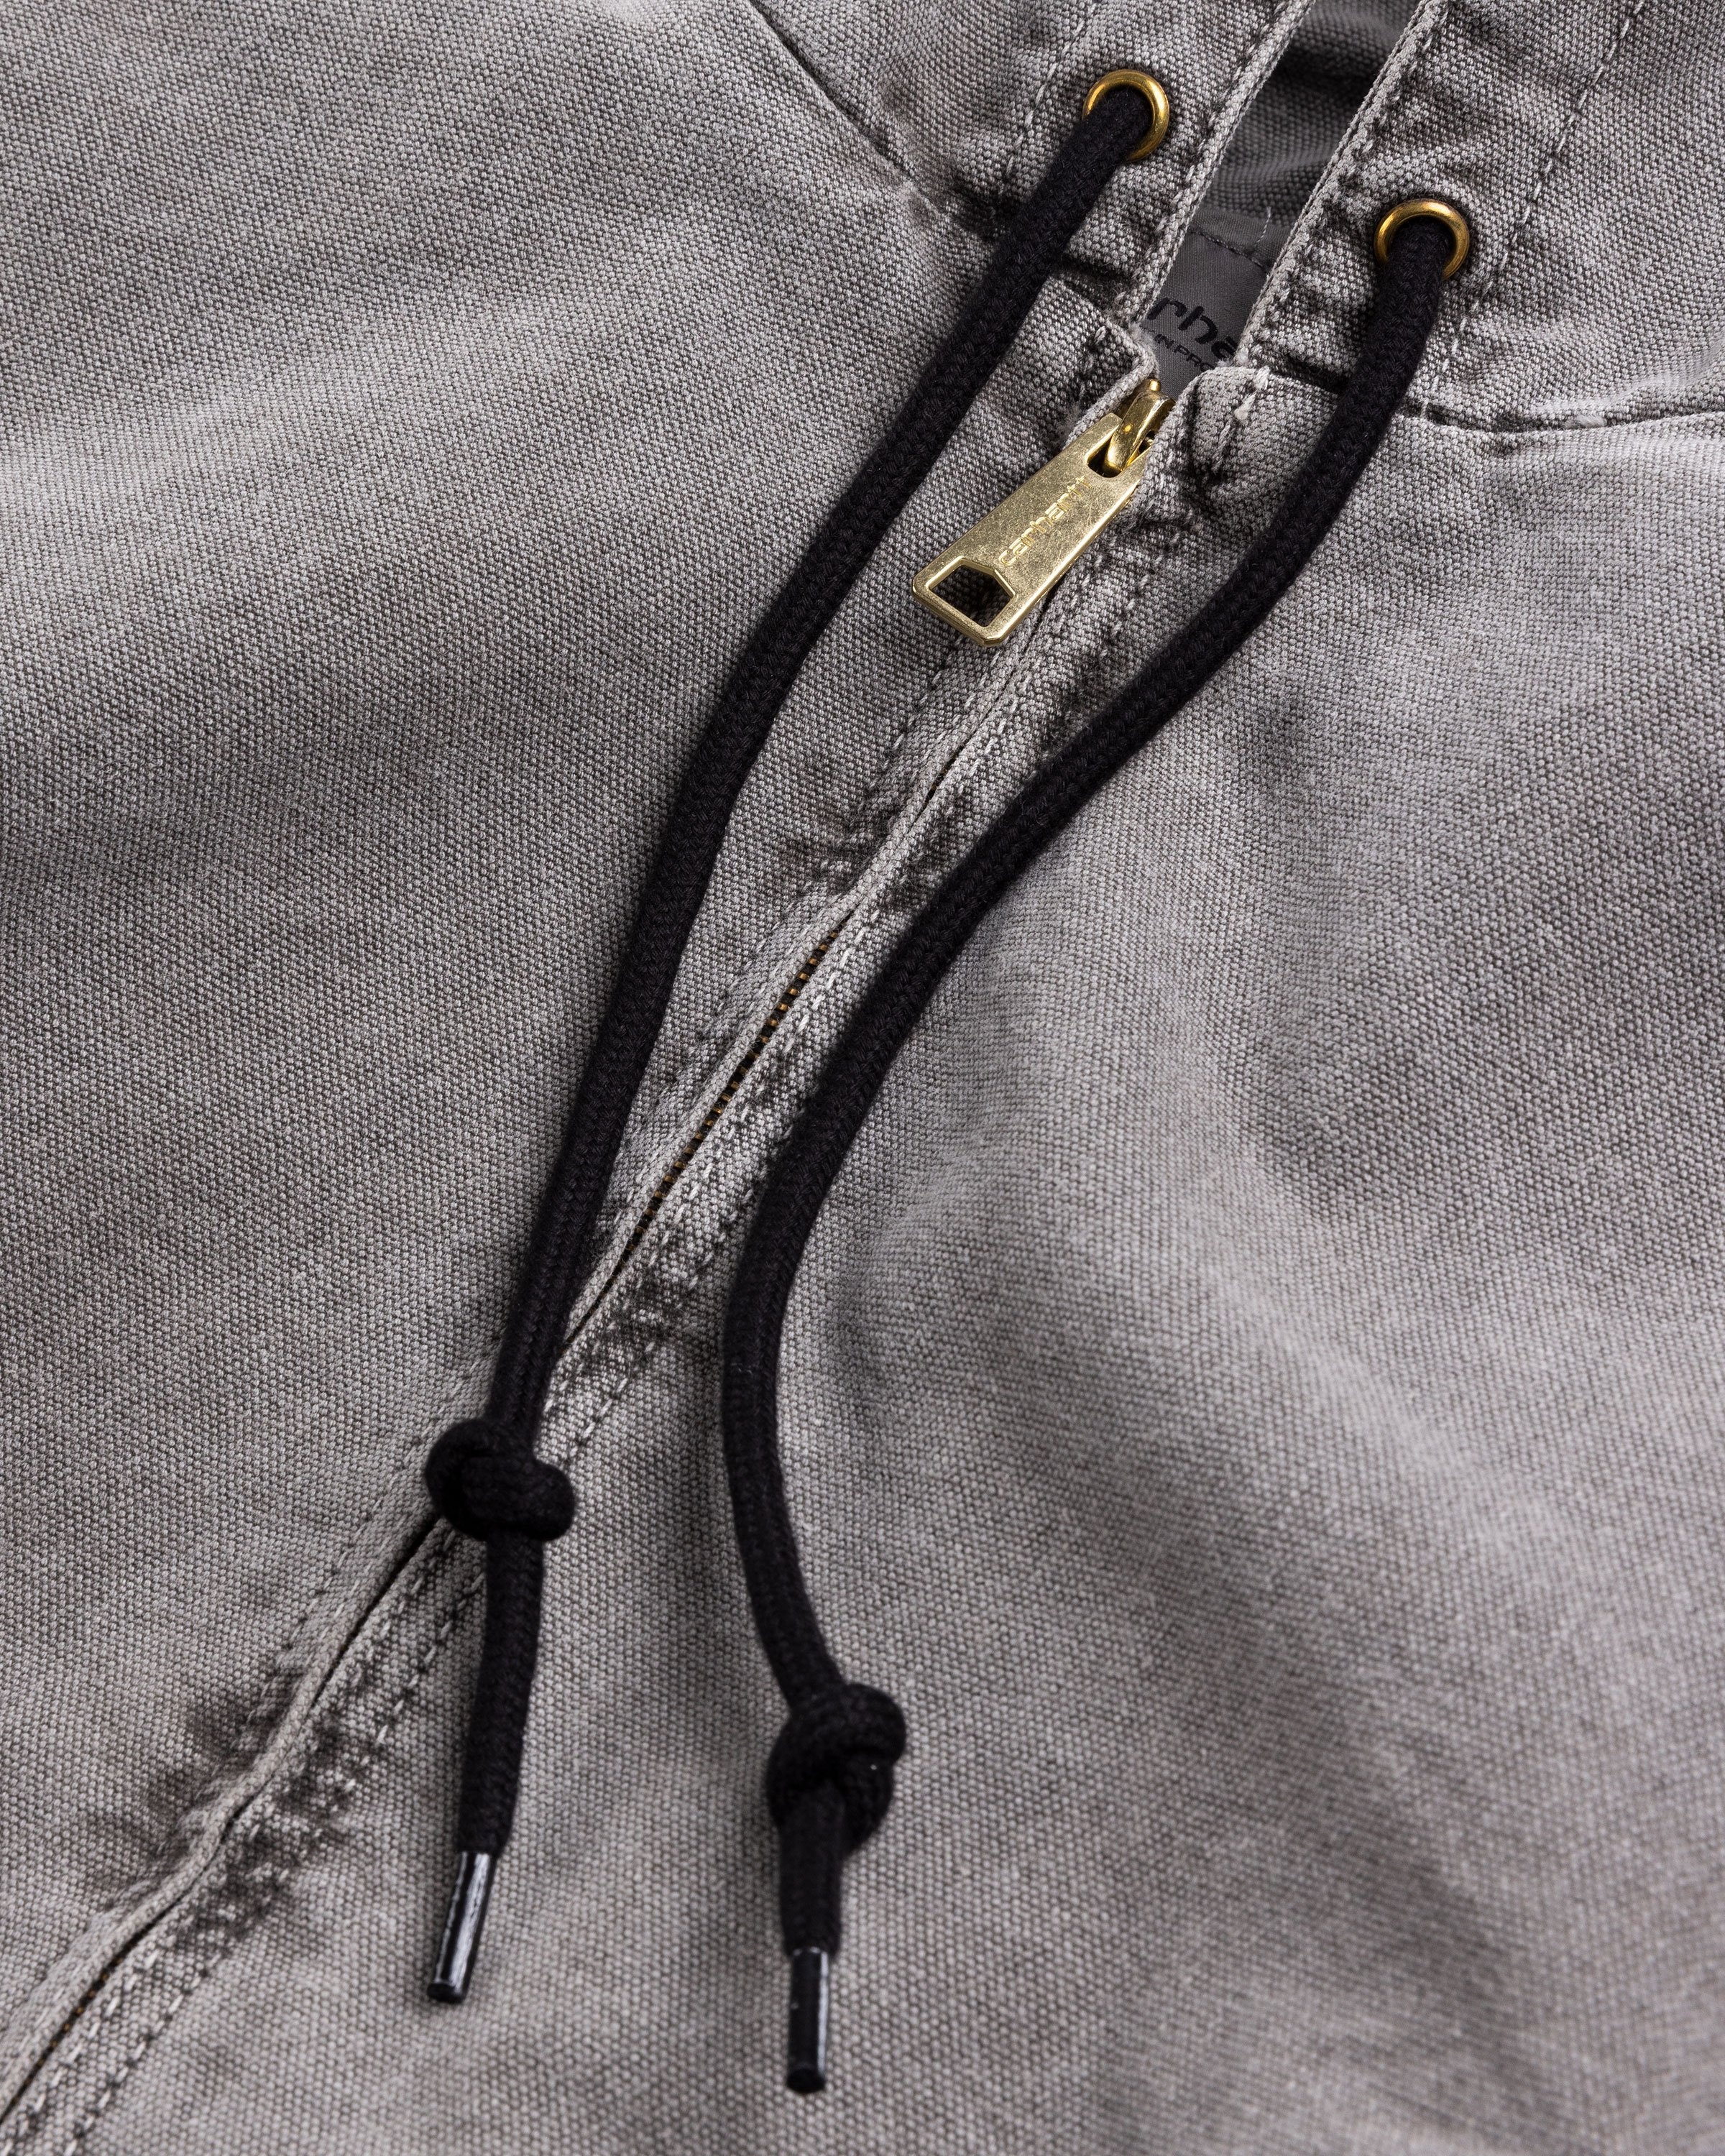 Carhartt WIP – Active Jacket Black - Outerwear - Black - Image 6